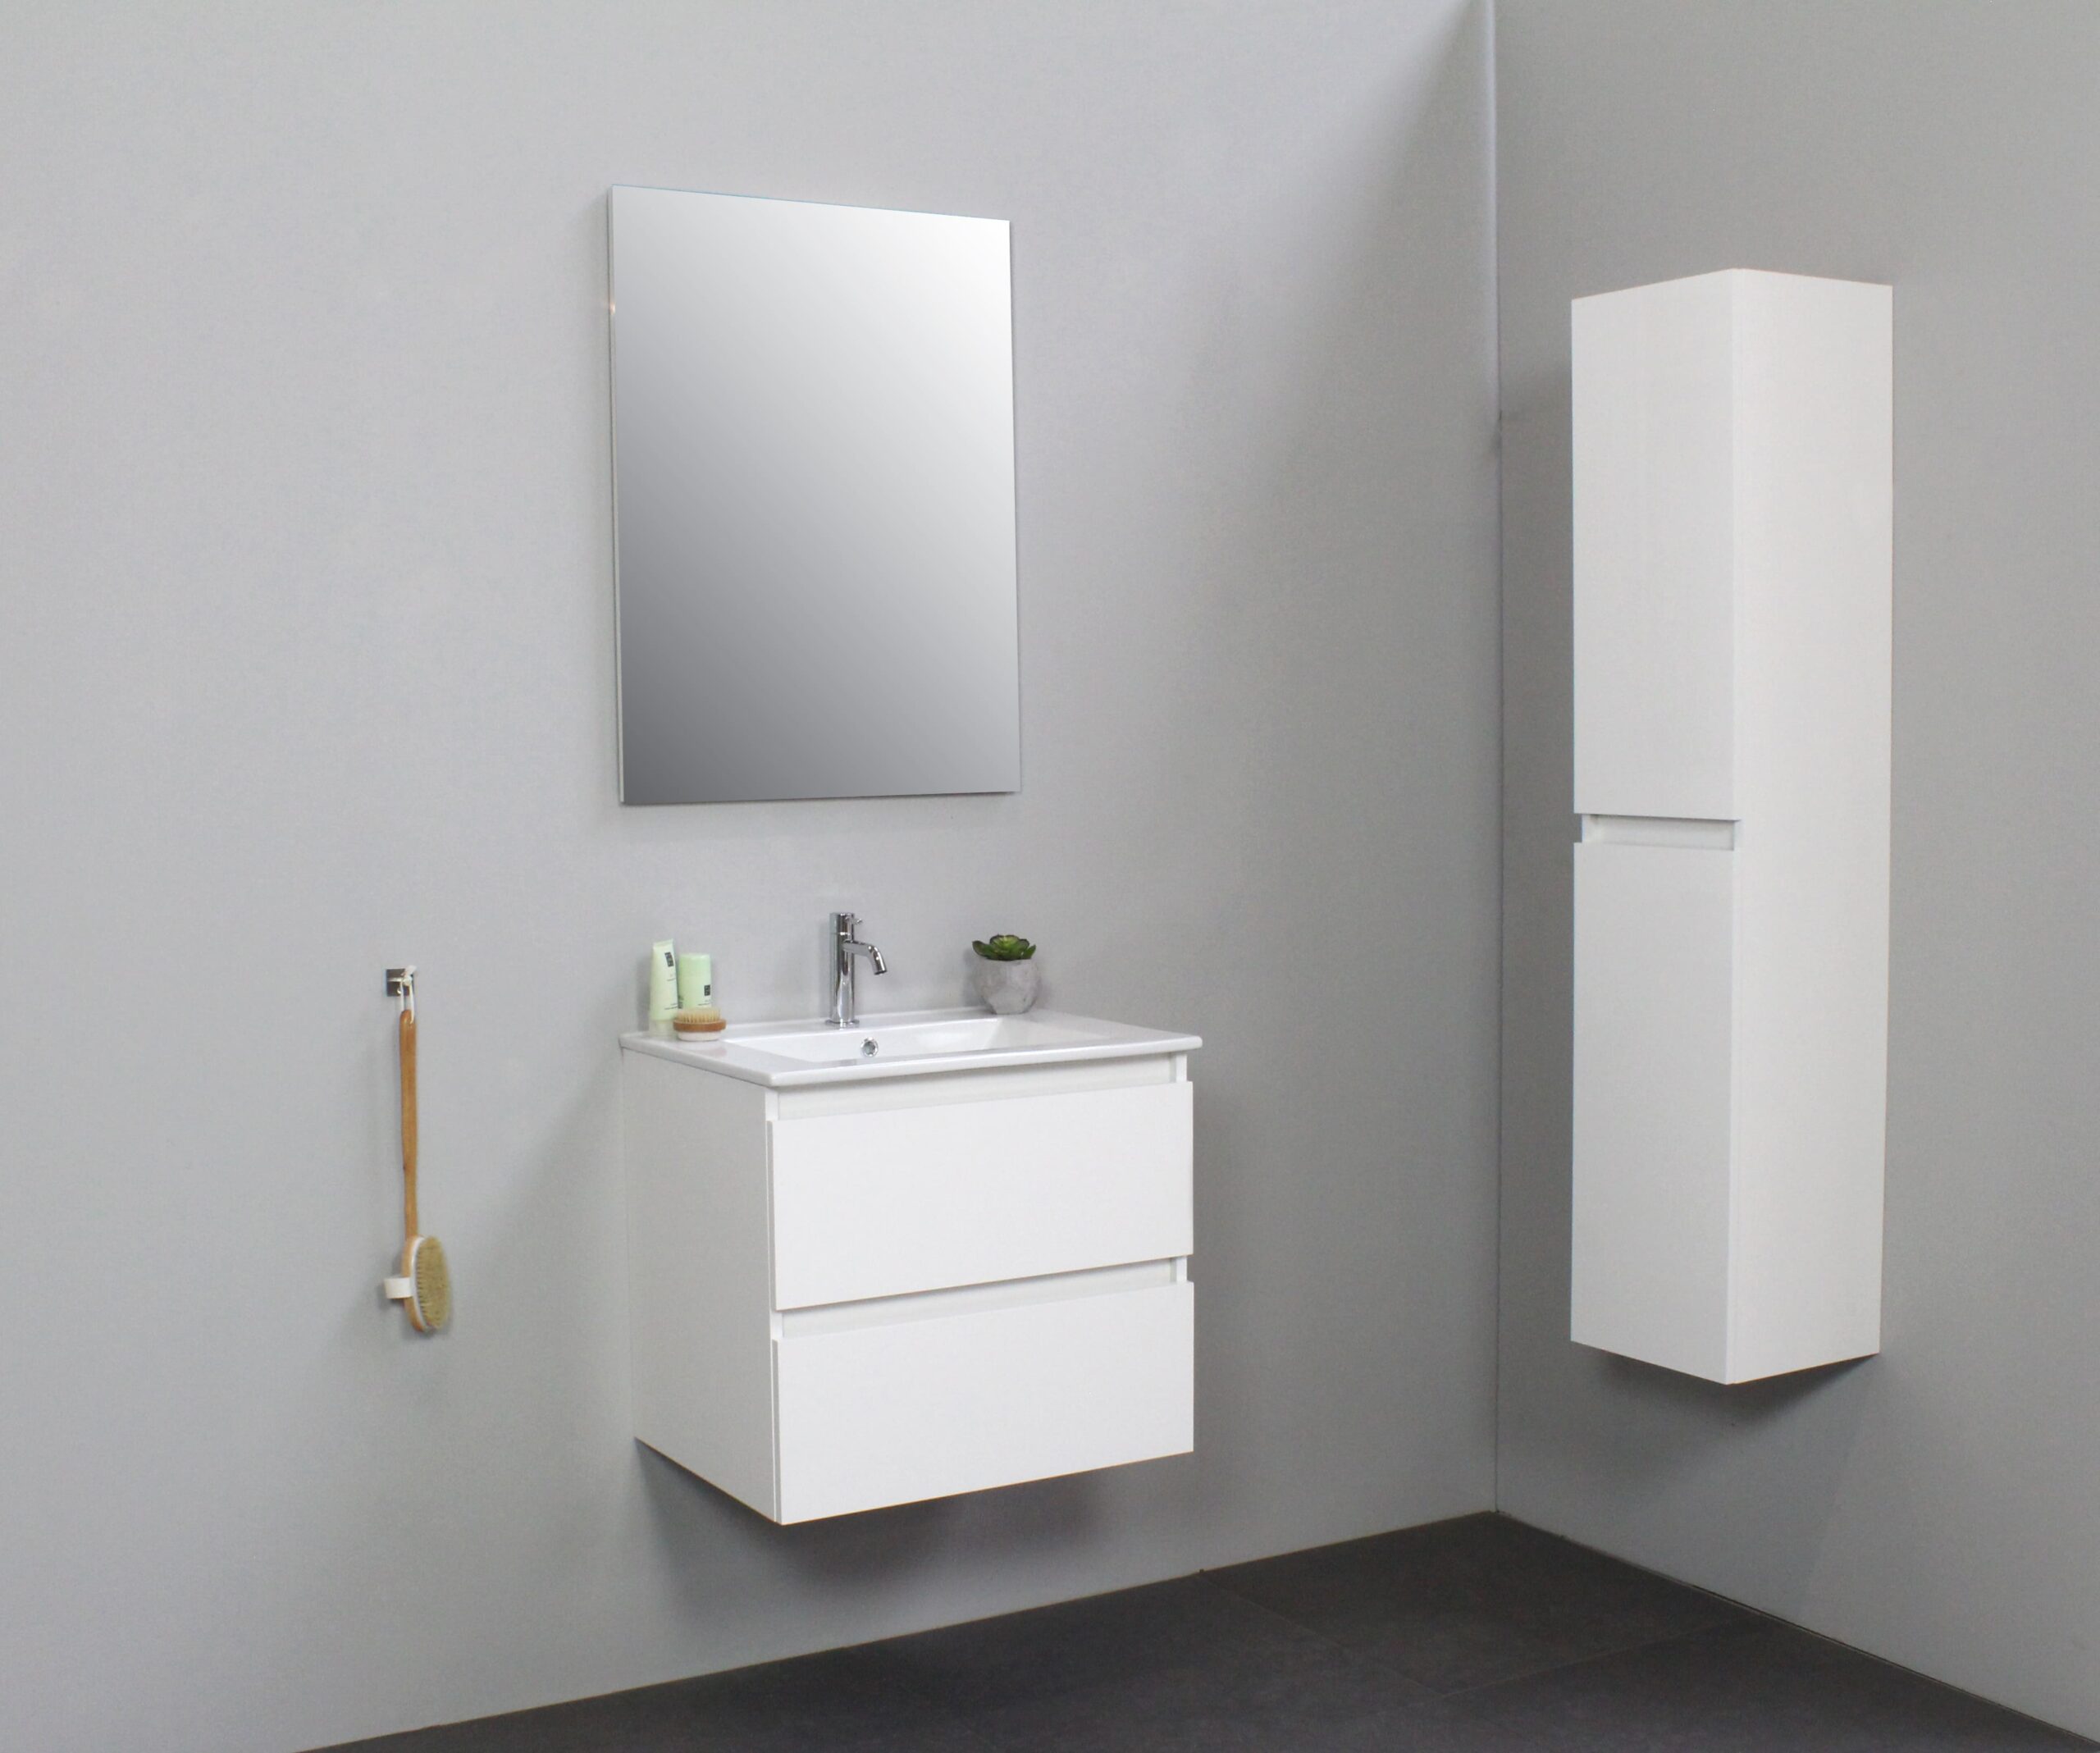 passend verhaal Bezwaar Sanilet hoogglans wit badkamermeubel & wastafel van porselein - 60 cm -  Badkamermeubel outlet